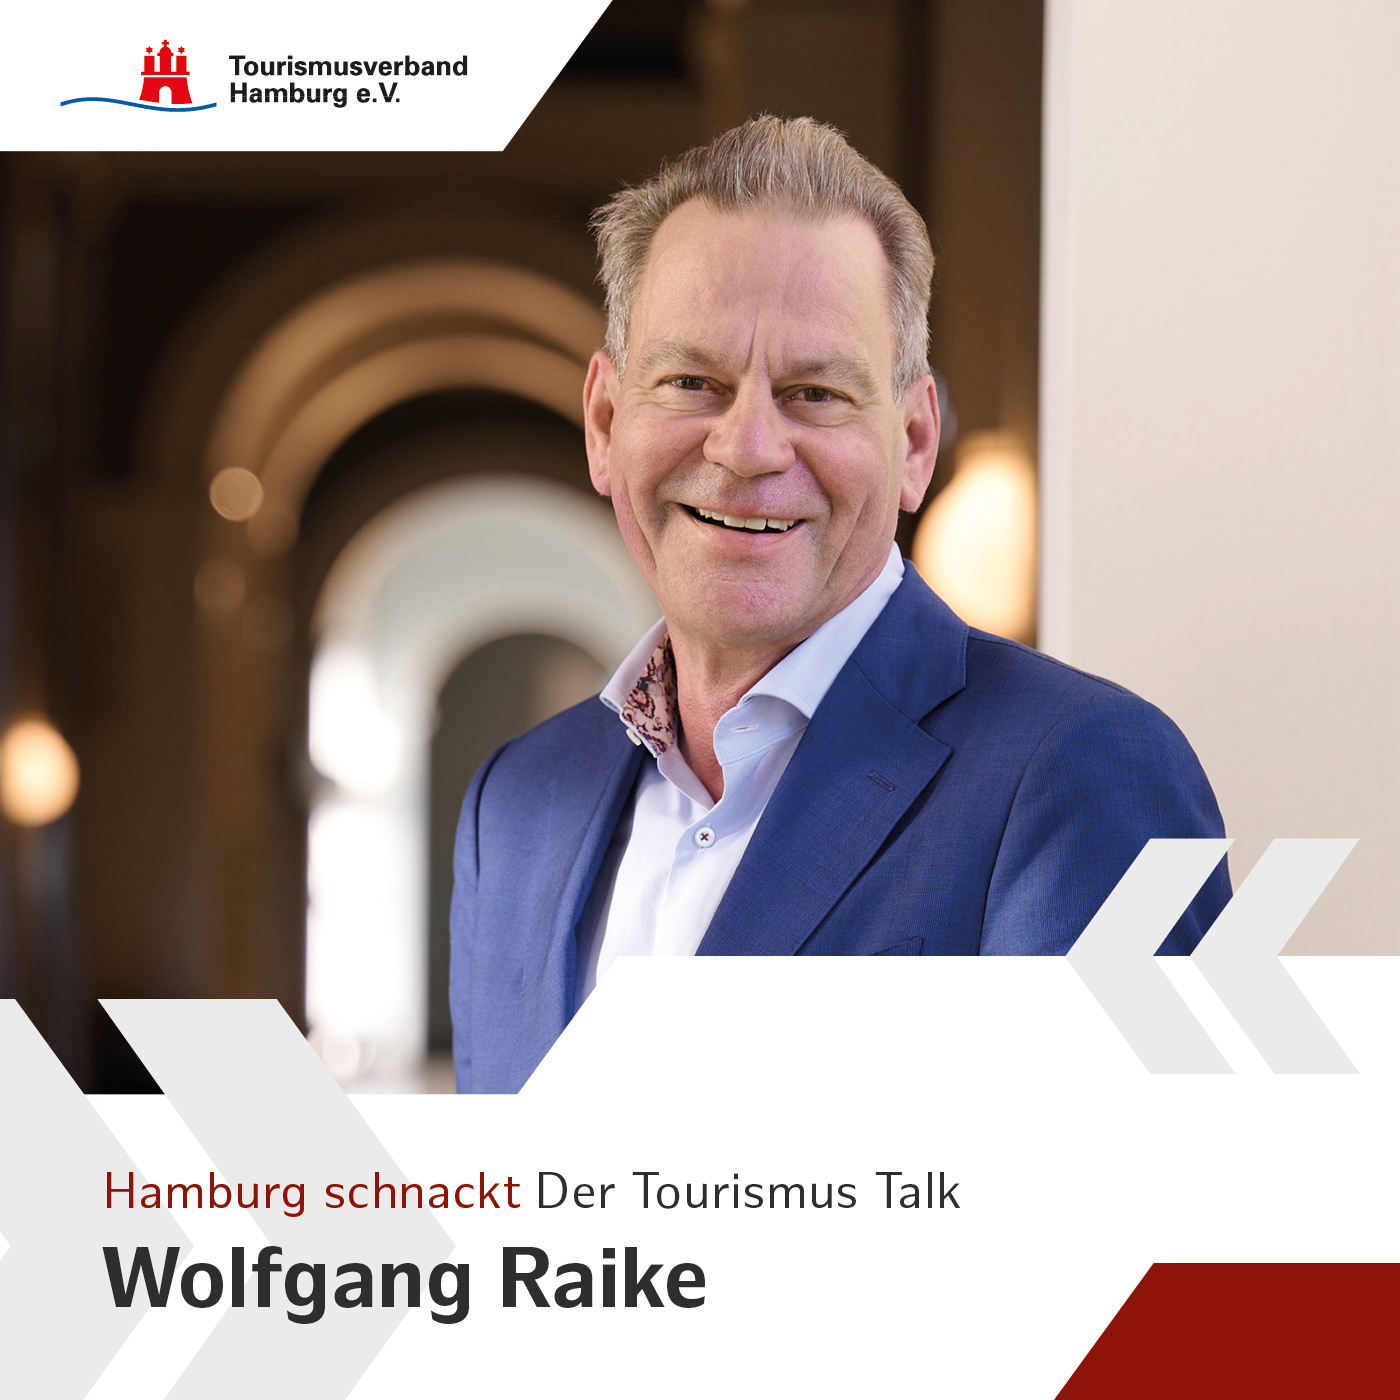 Hamburg schnackt mit Wolfgang Raike